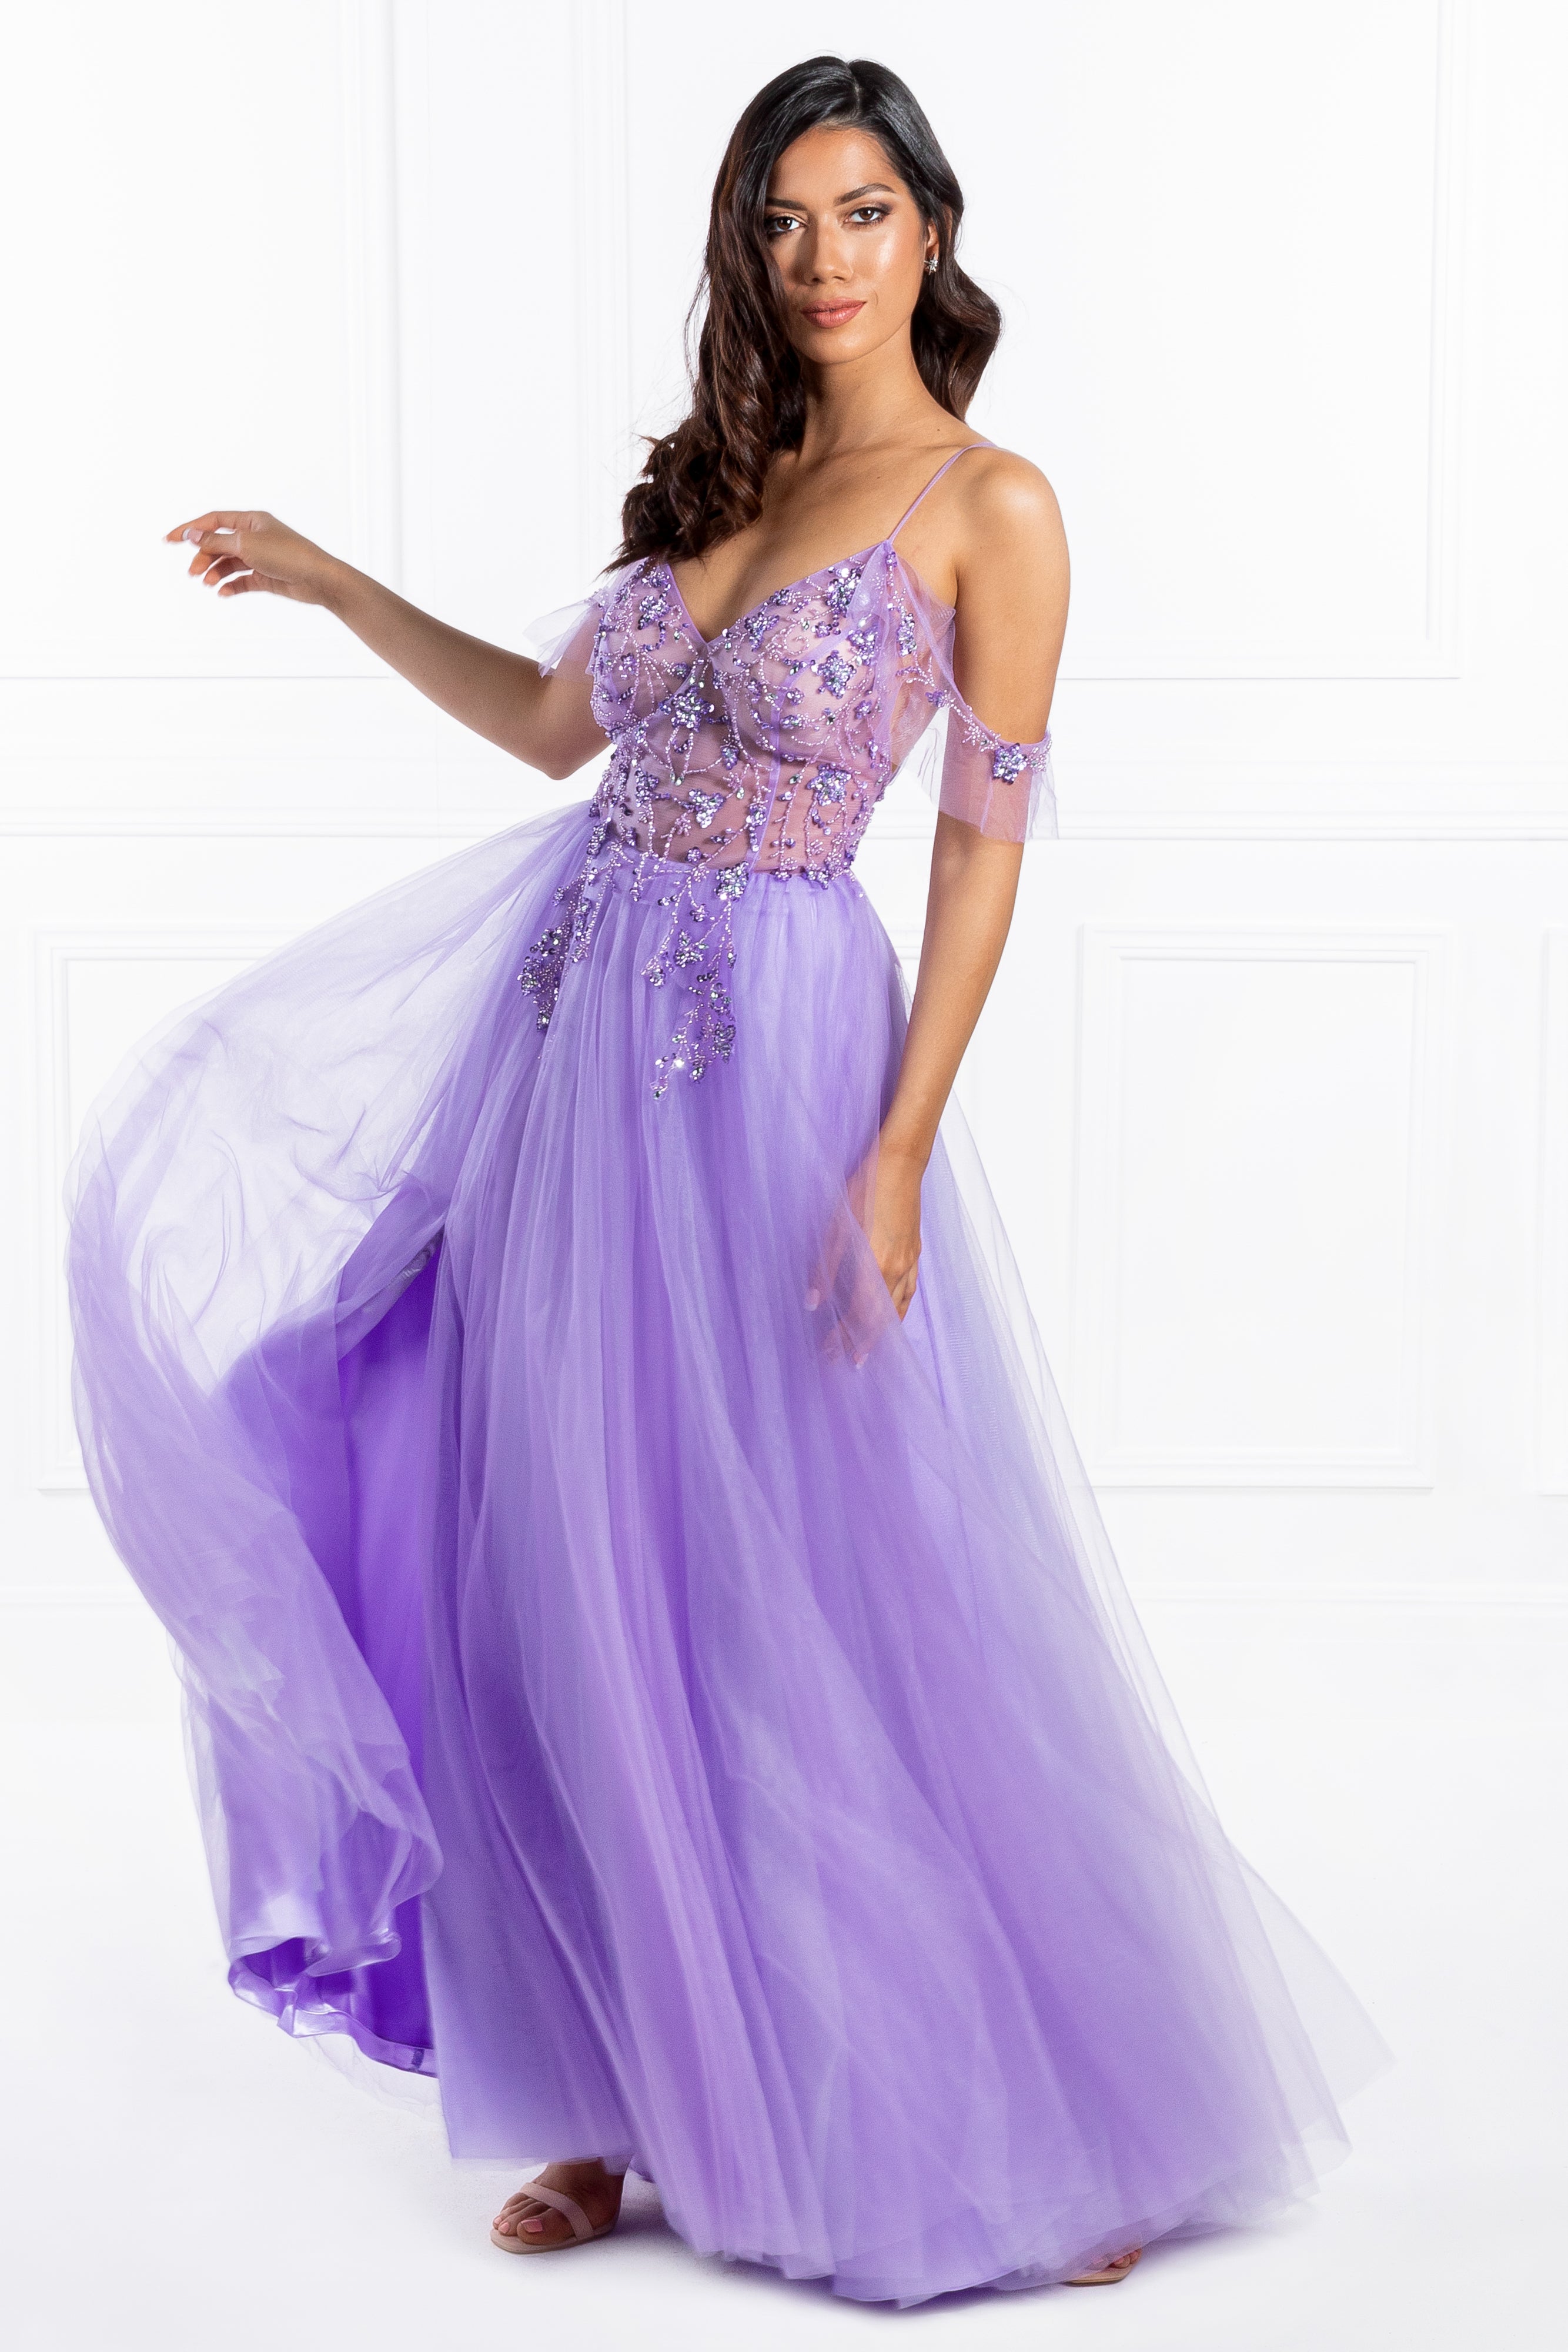 Honey Couture LOLA Purple Crystal Tulle Skirt Formal Dress